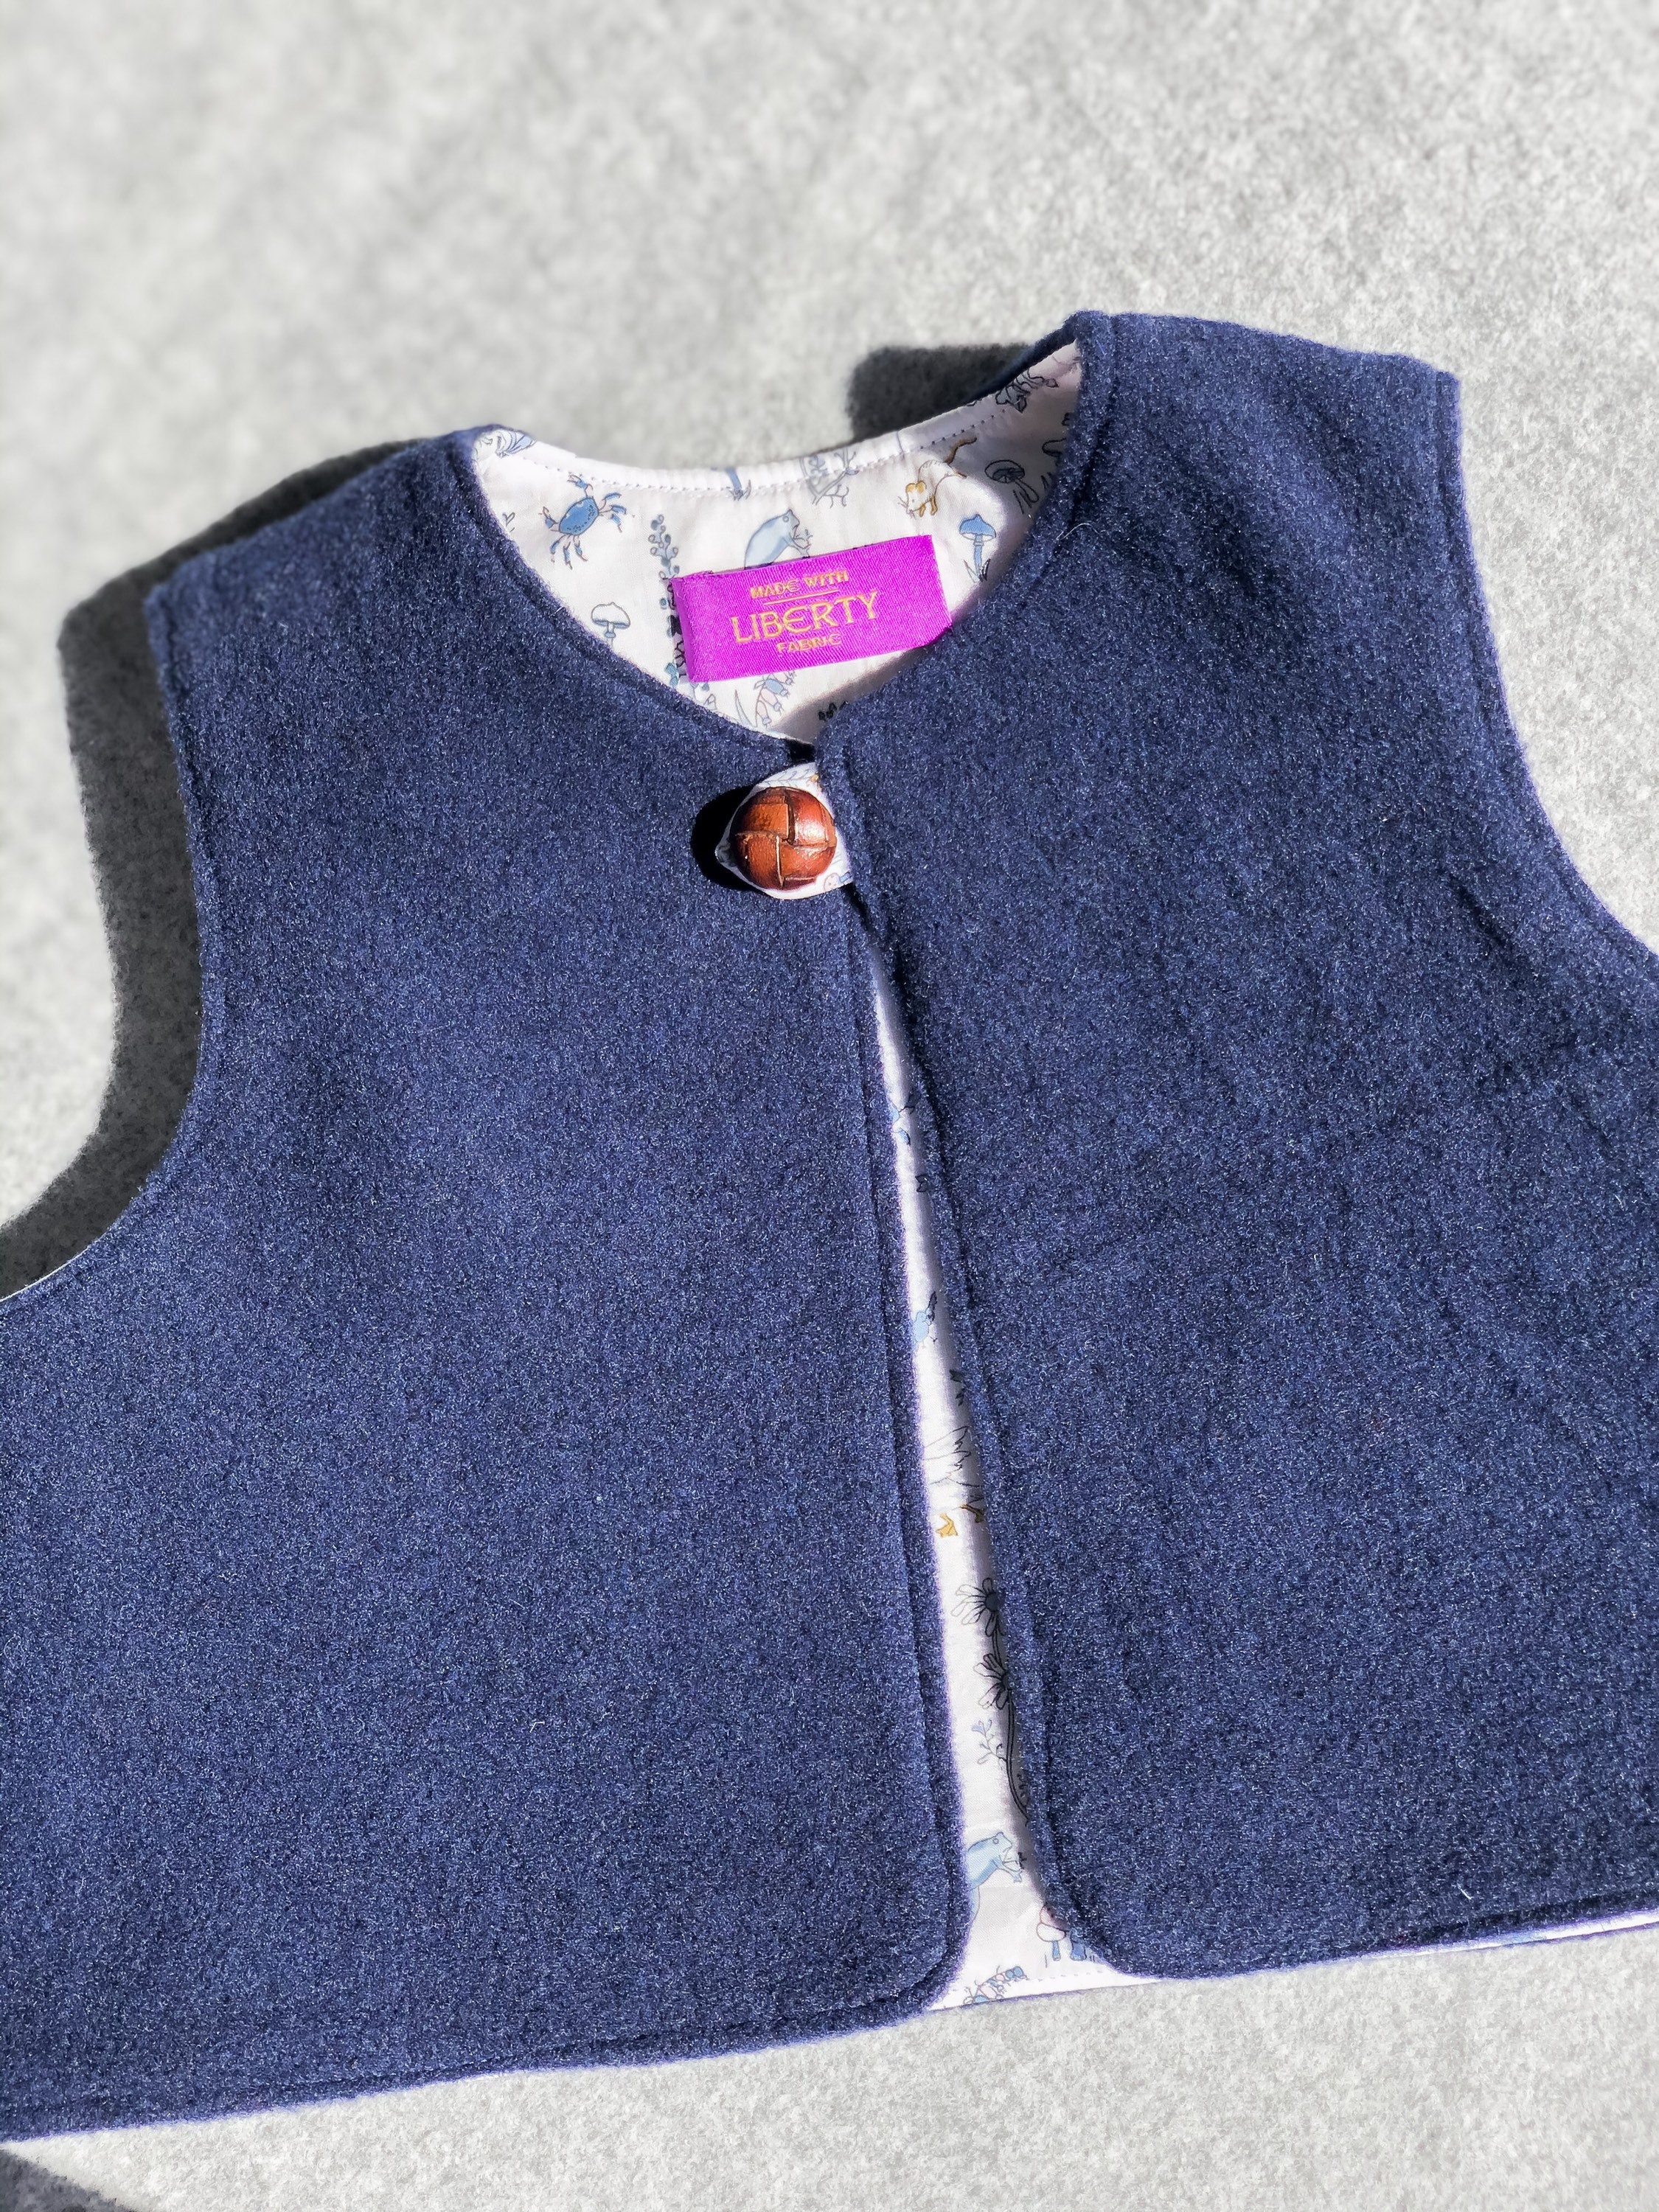 Wool cashmere Liberty baby vest Baby winter vest Liberty | Etsy